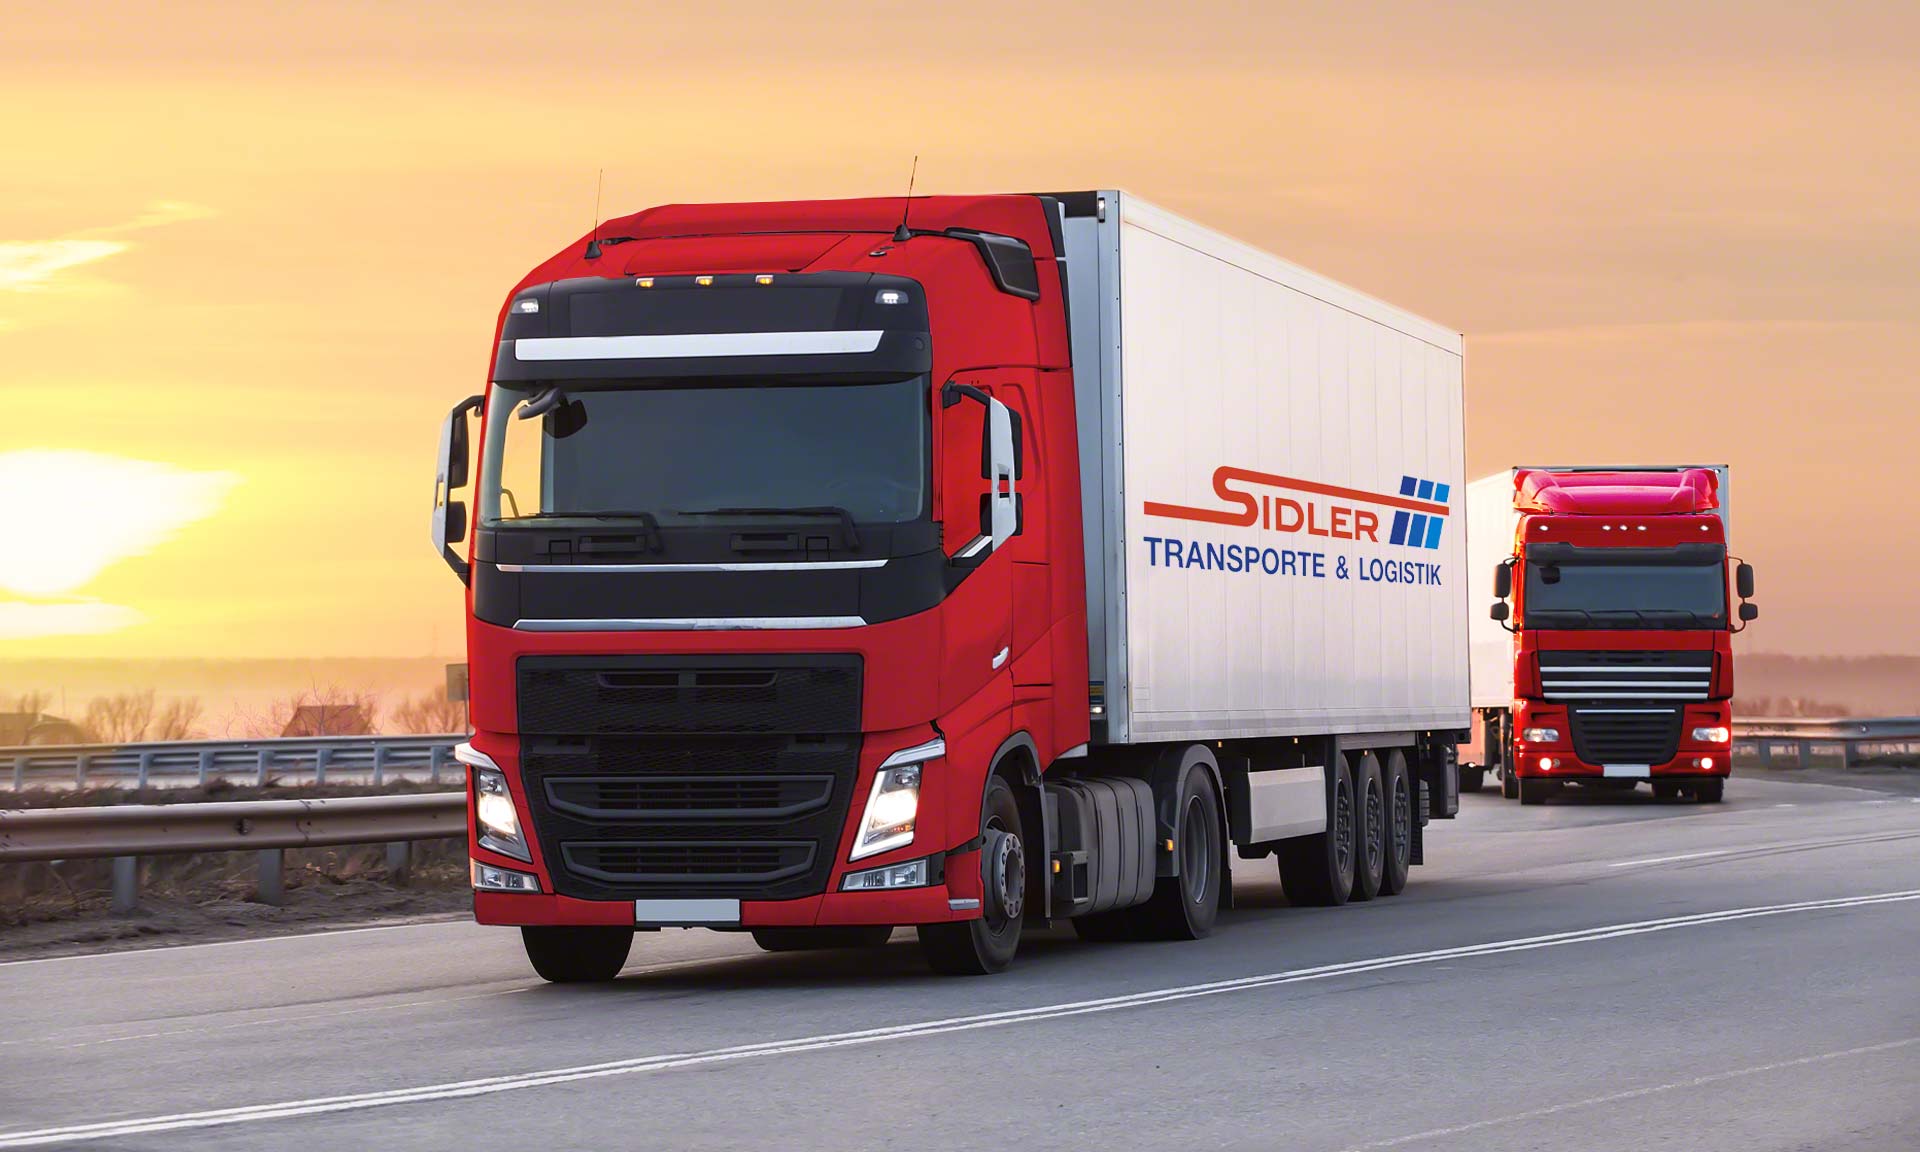 Mecalux digitalizará tres bodegas de Sidler Transporte & Logistik en Suiza